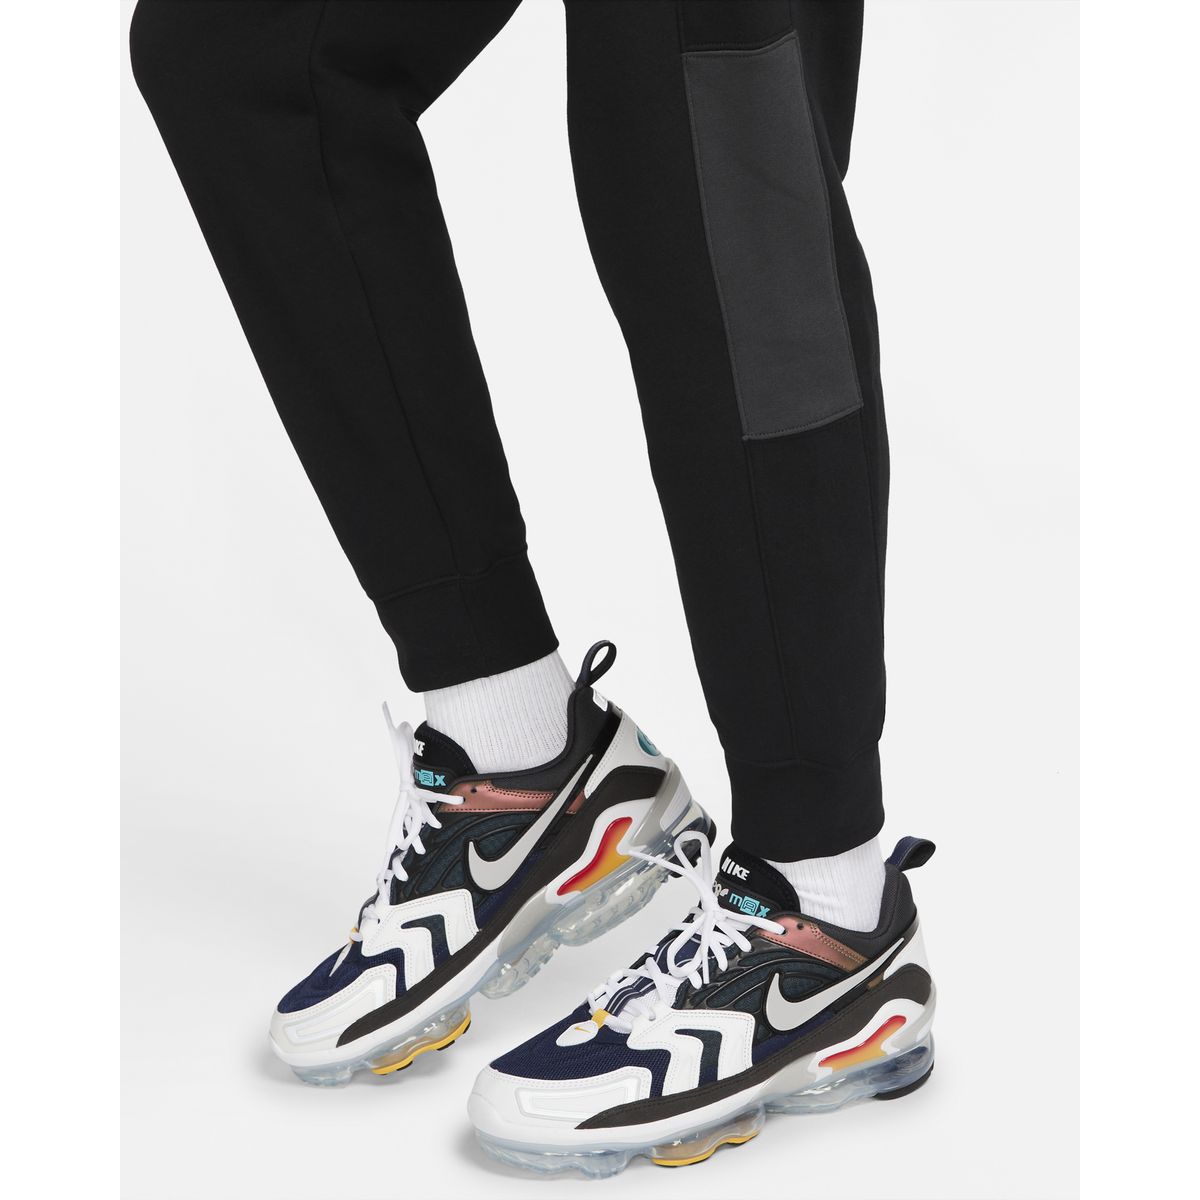 Nike Sportswear Sport Essentials Herren Jogginganzug